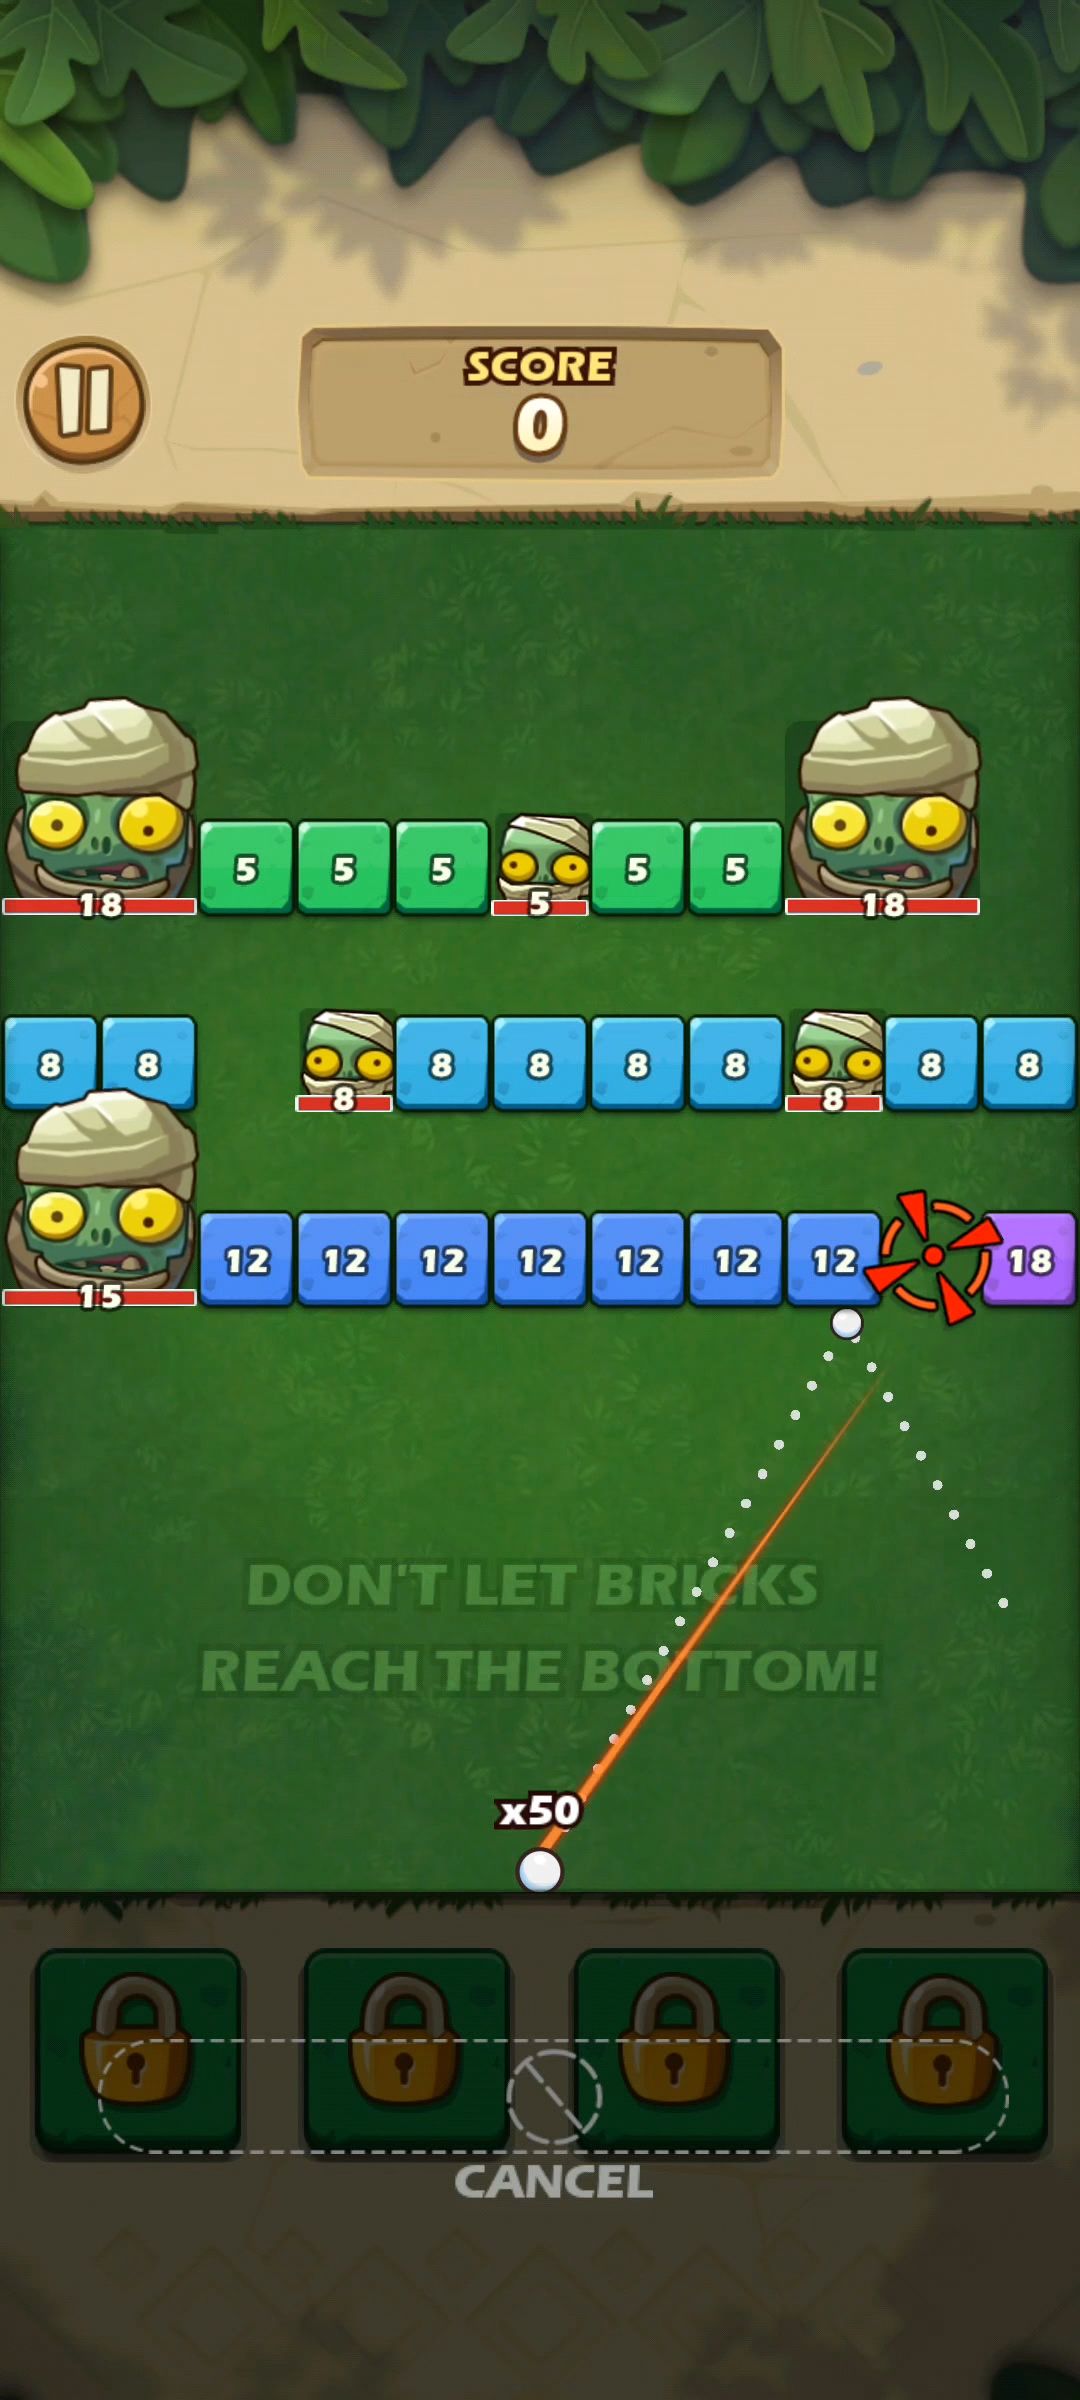 Download Breaker Fun 2: Zombie Brick für Android kostenlos.